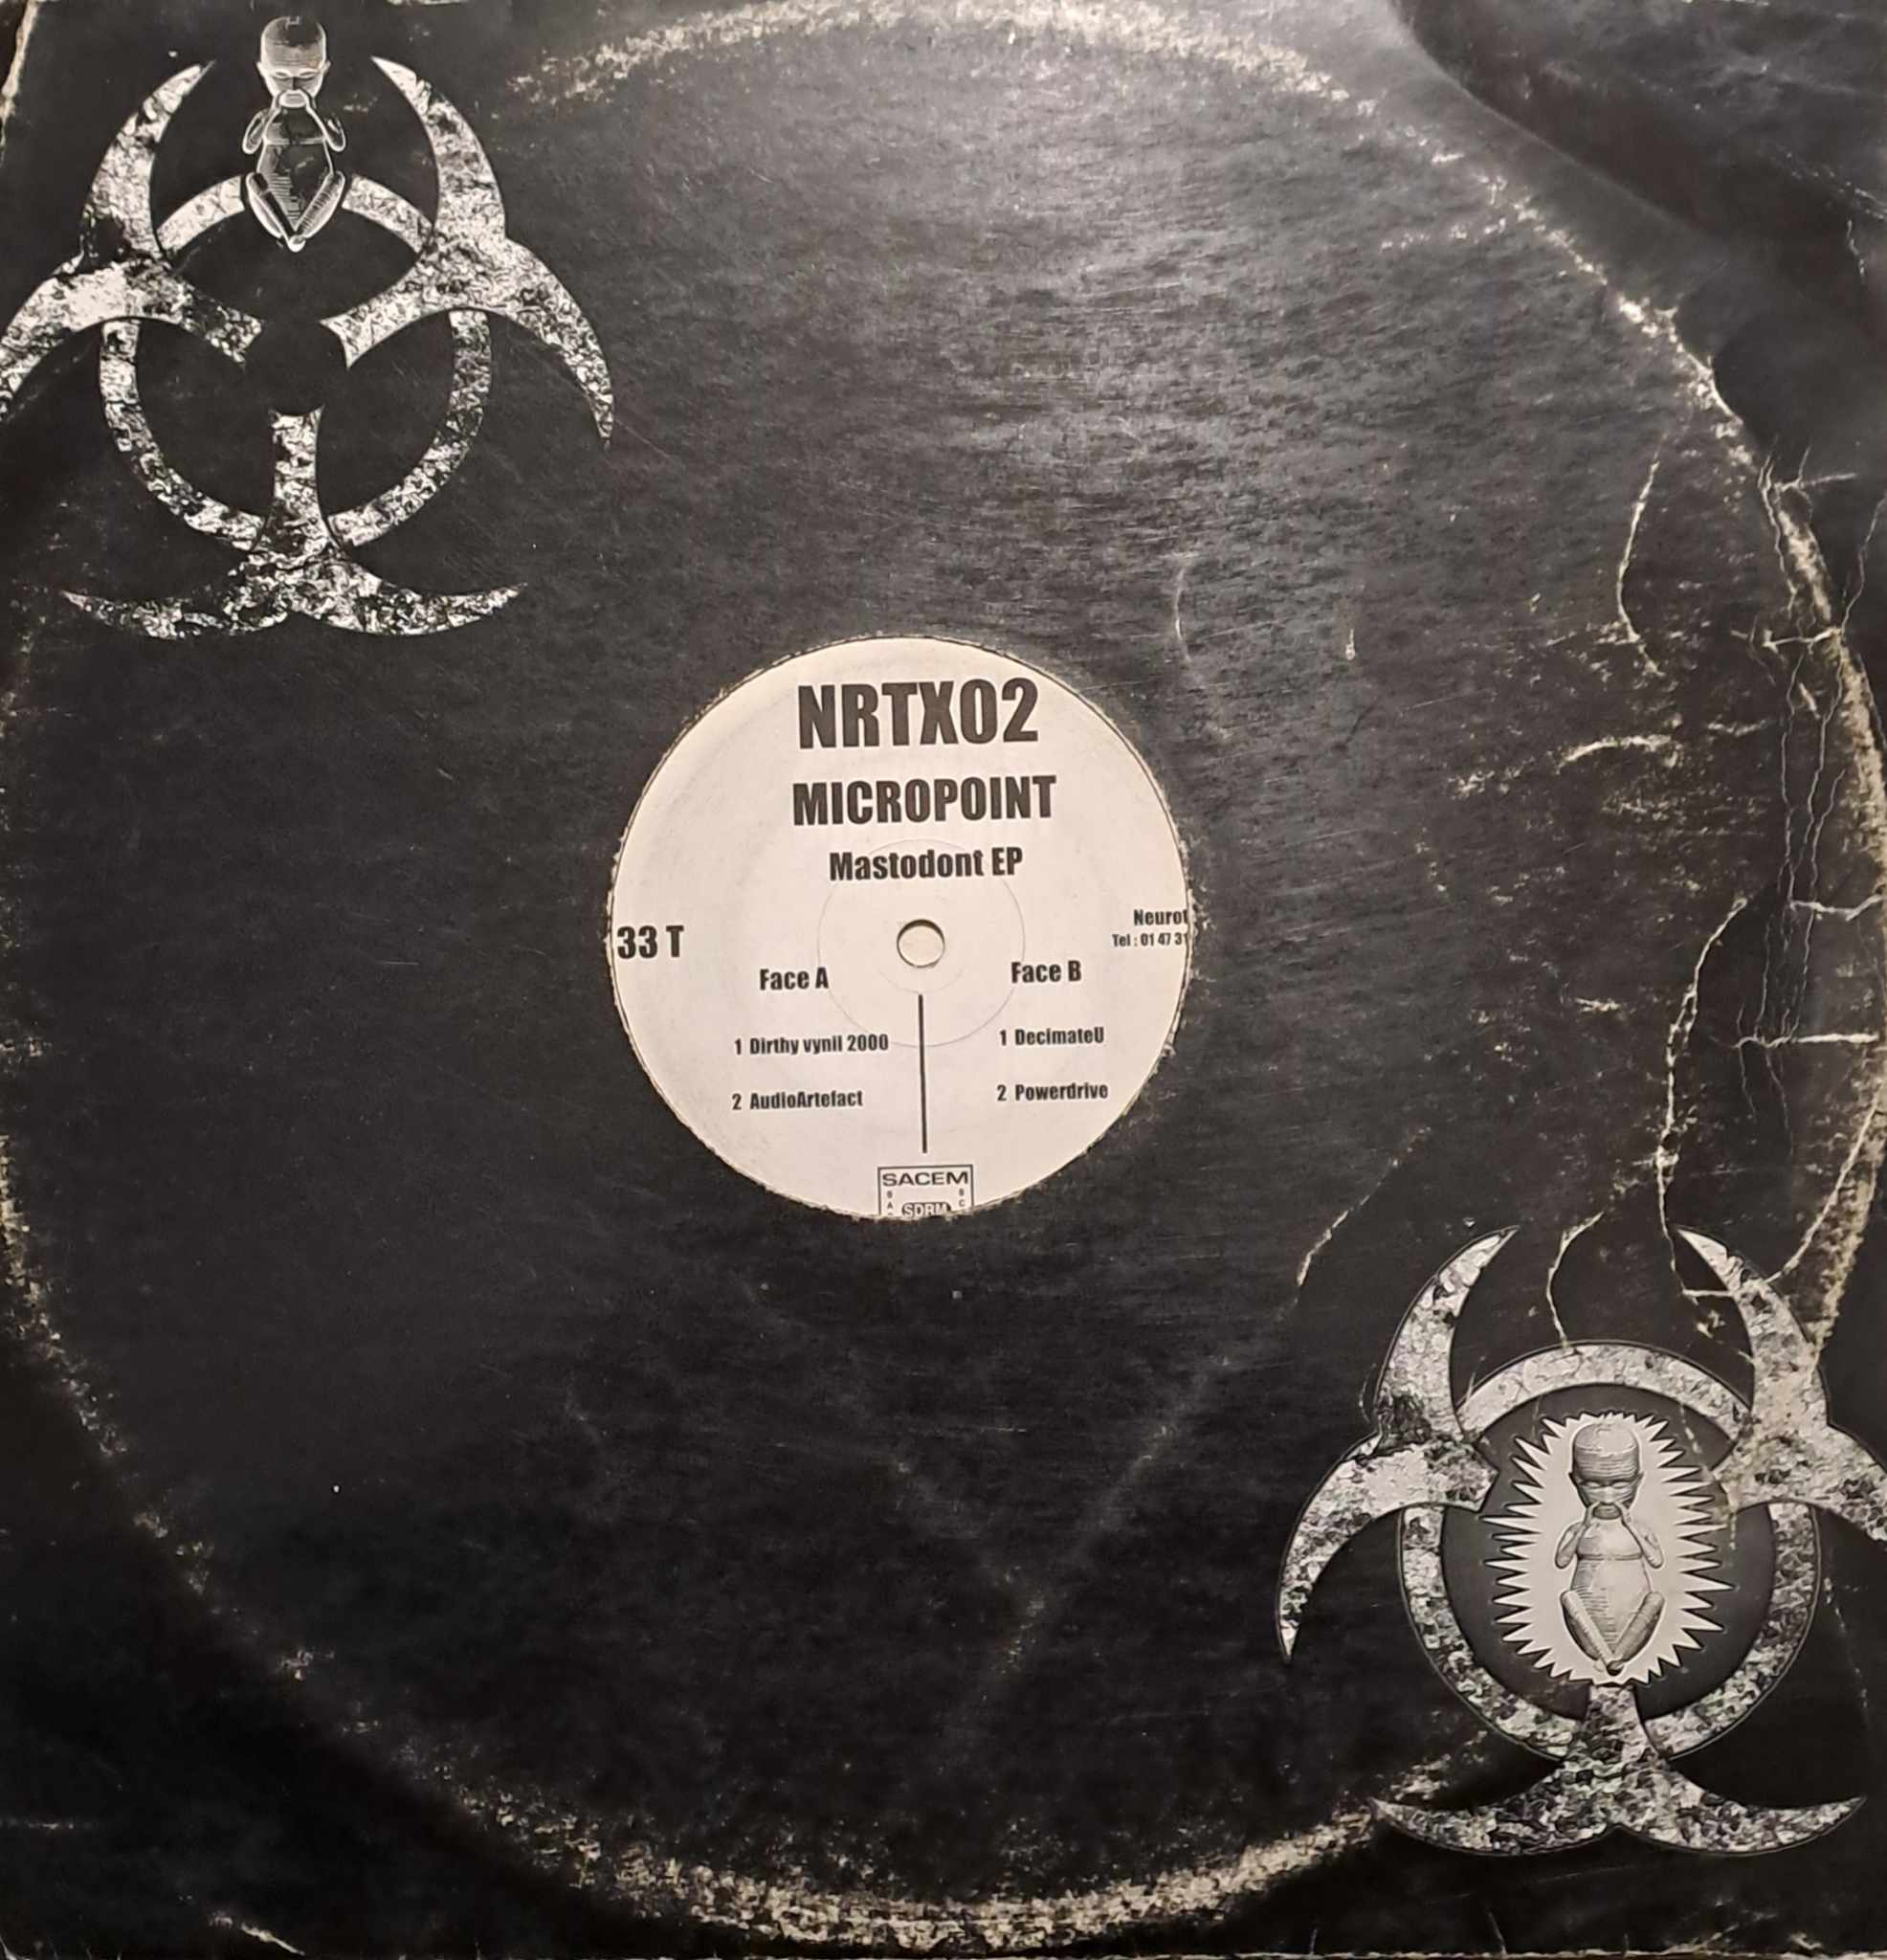 Neurotoxic 02 (original) - vinyle hardcore